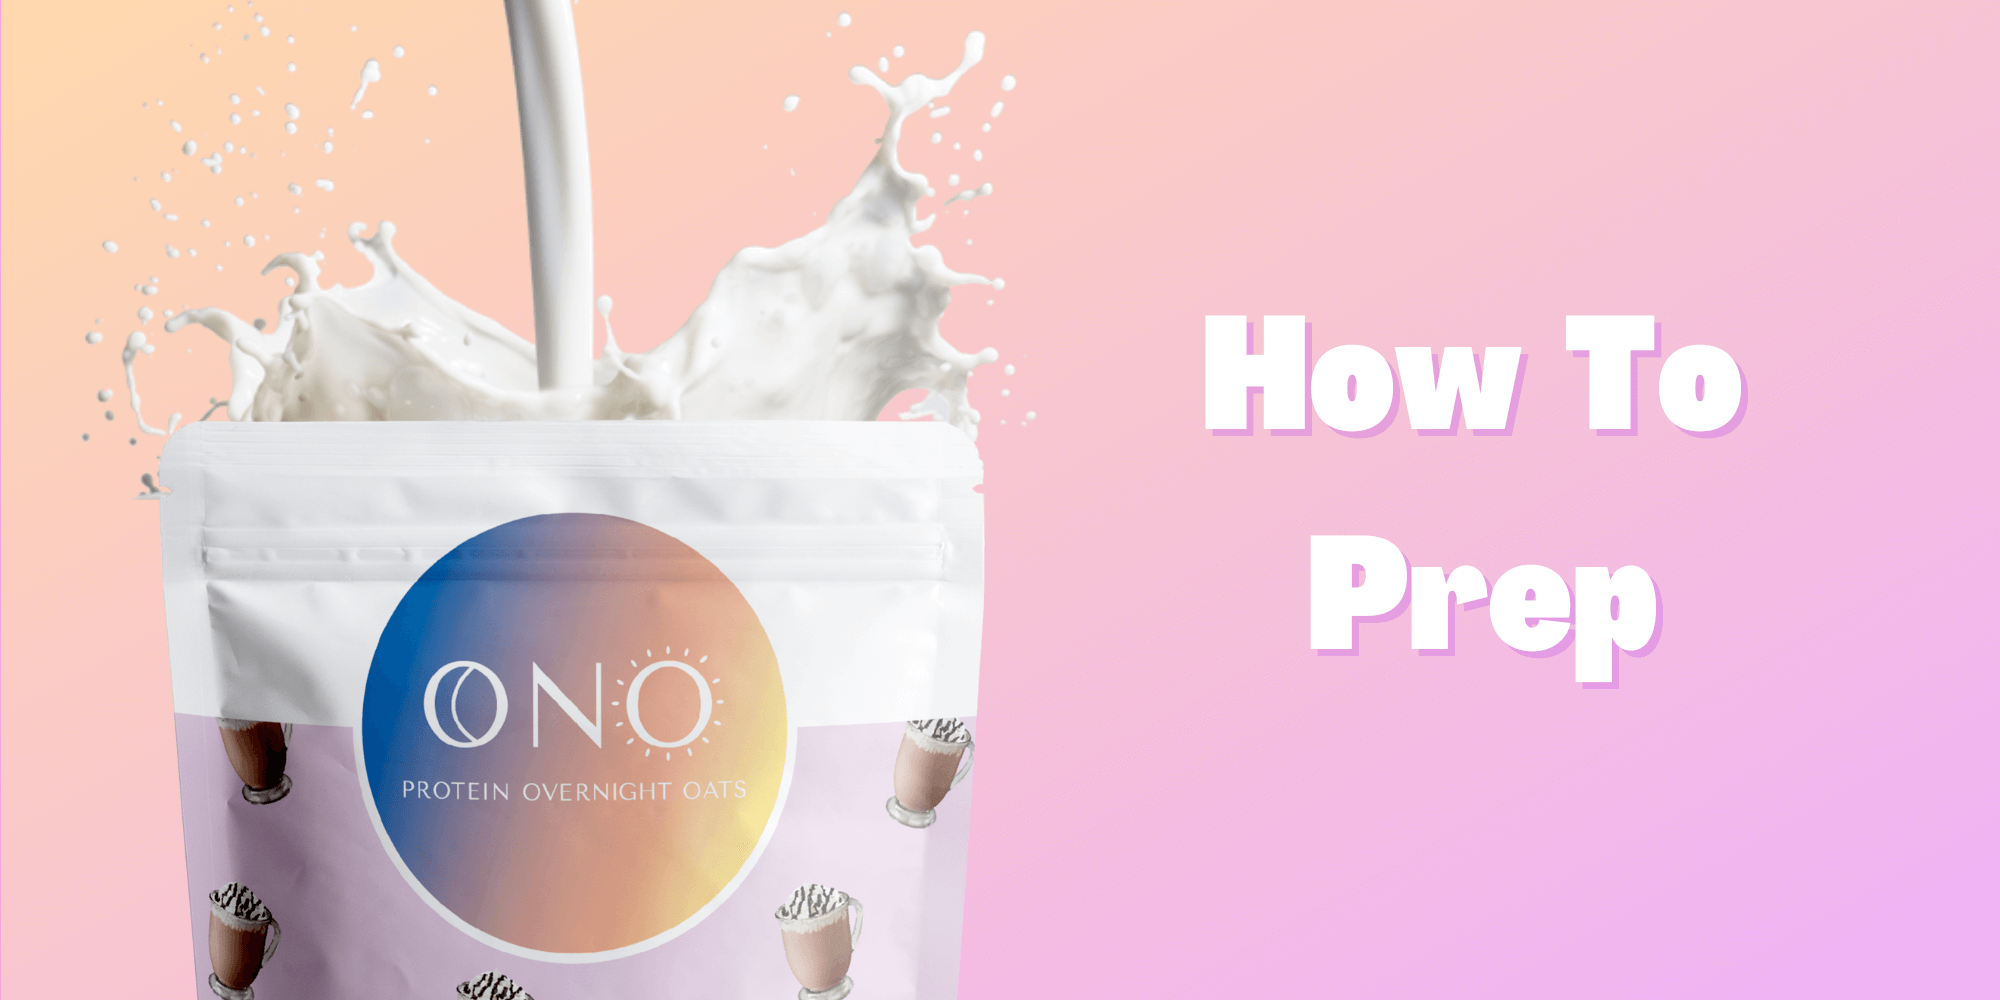 How To Make ONO